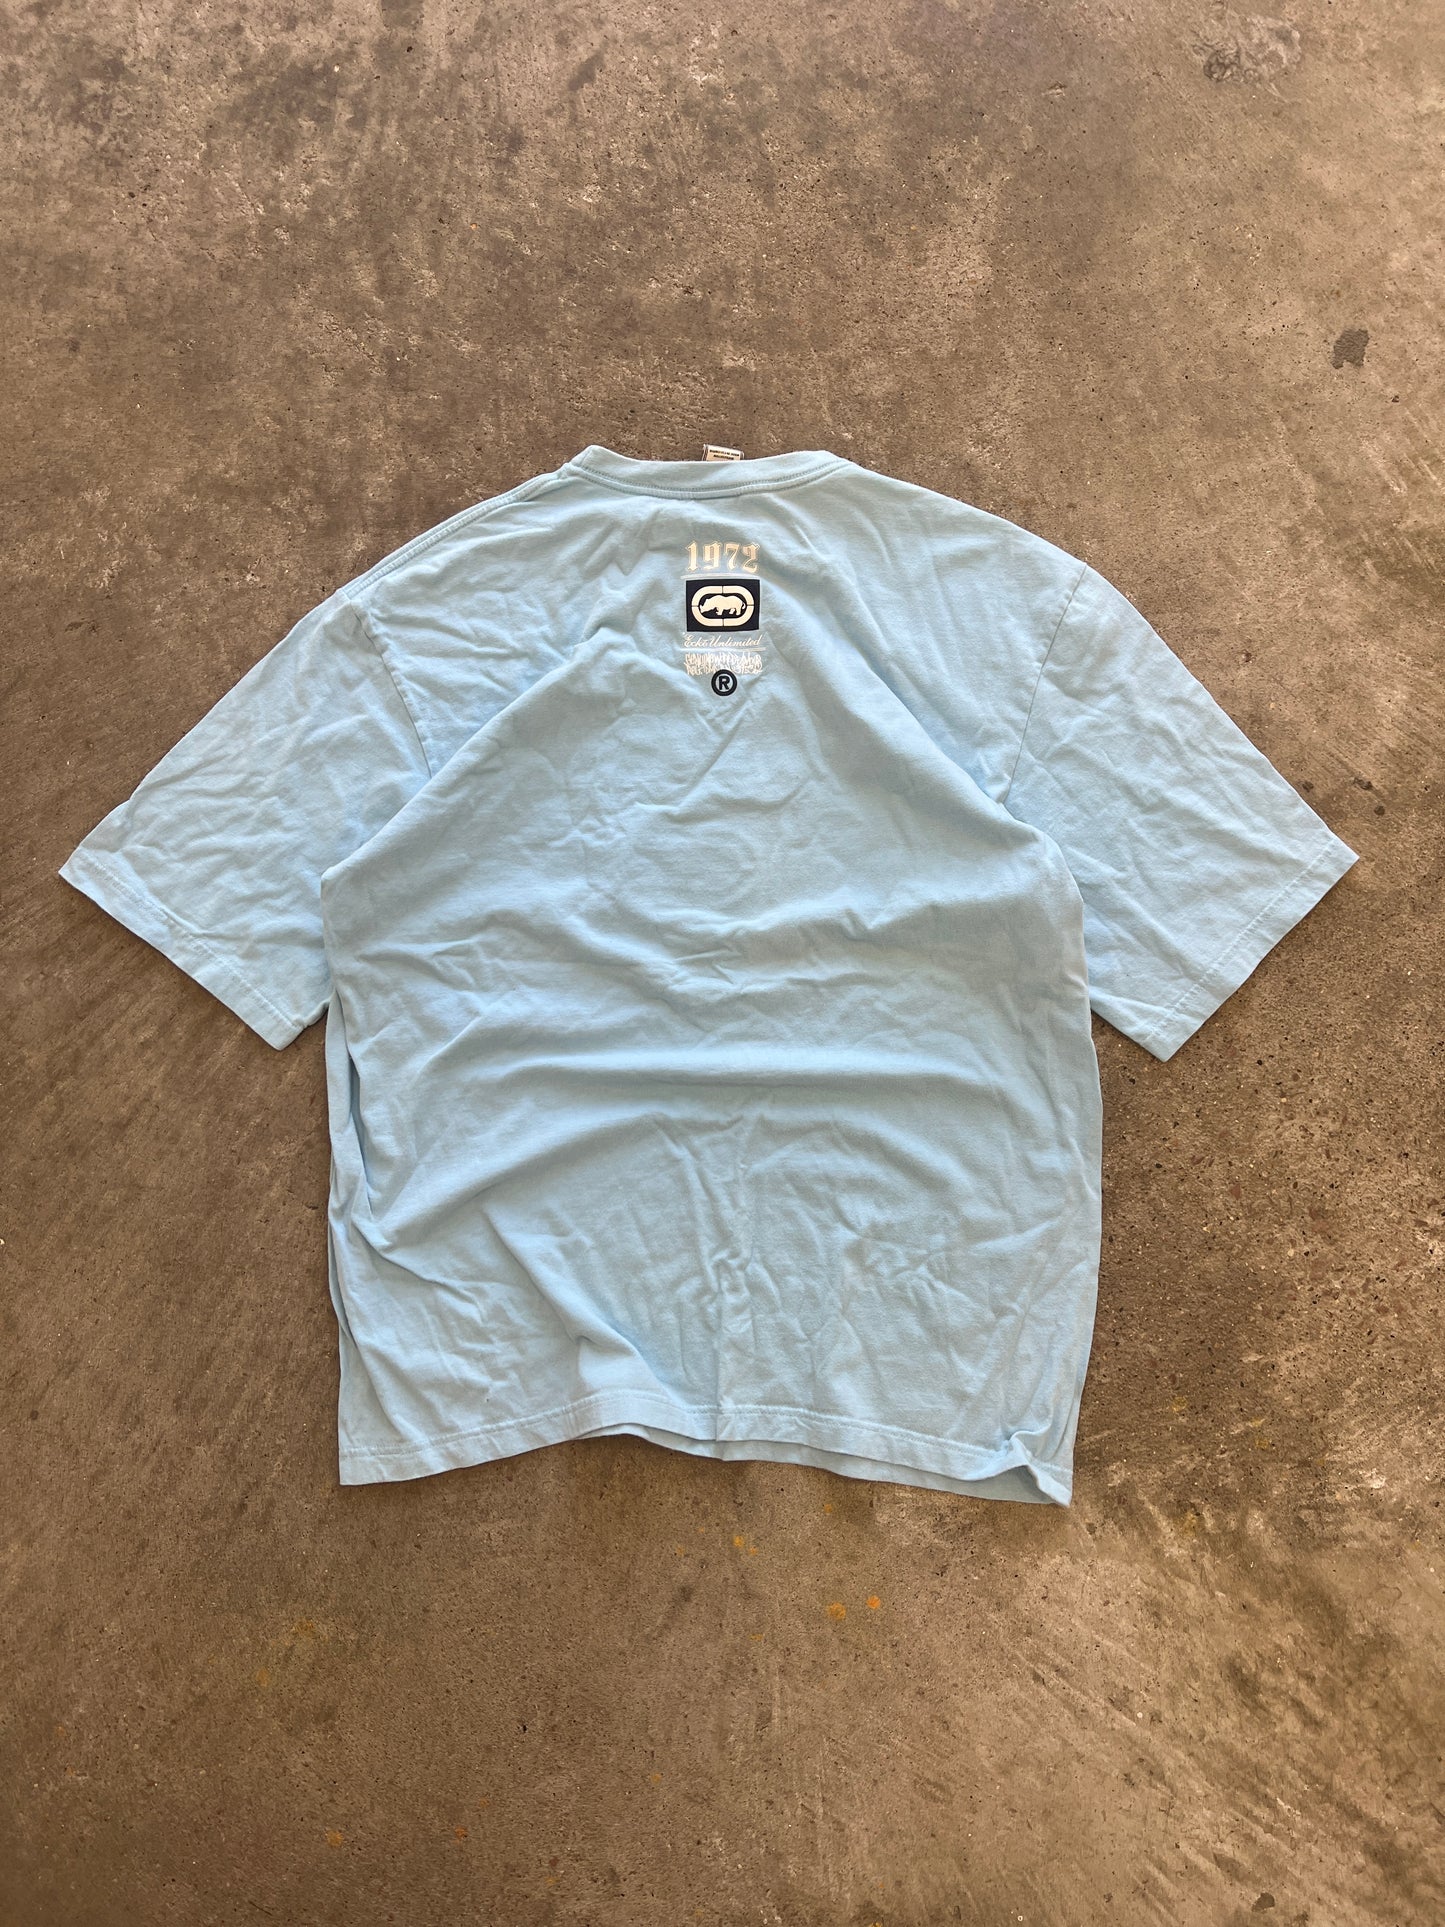 Vintage Ecko Unlimited Shirt - XL